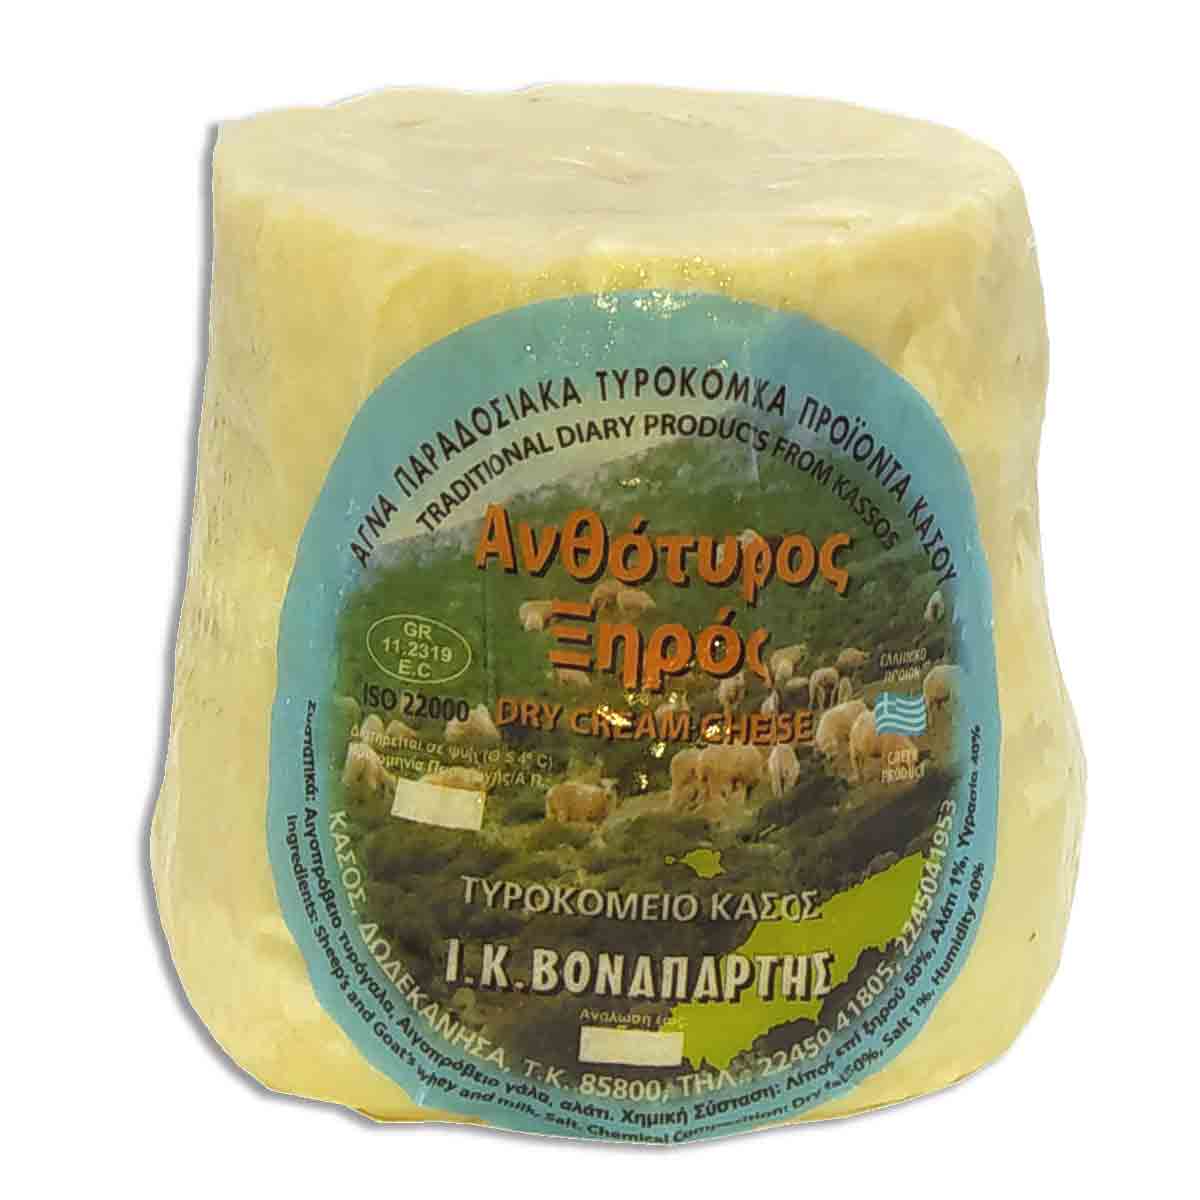 Dry Cream Cheese (Myzithra) from Kassos Island , 0.40-0.50gr, "Vonapartis"